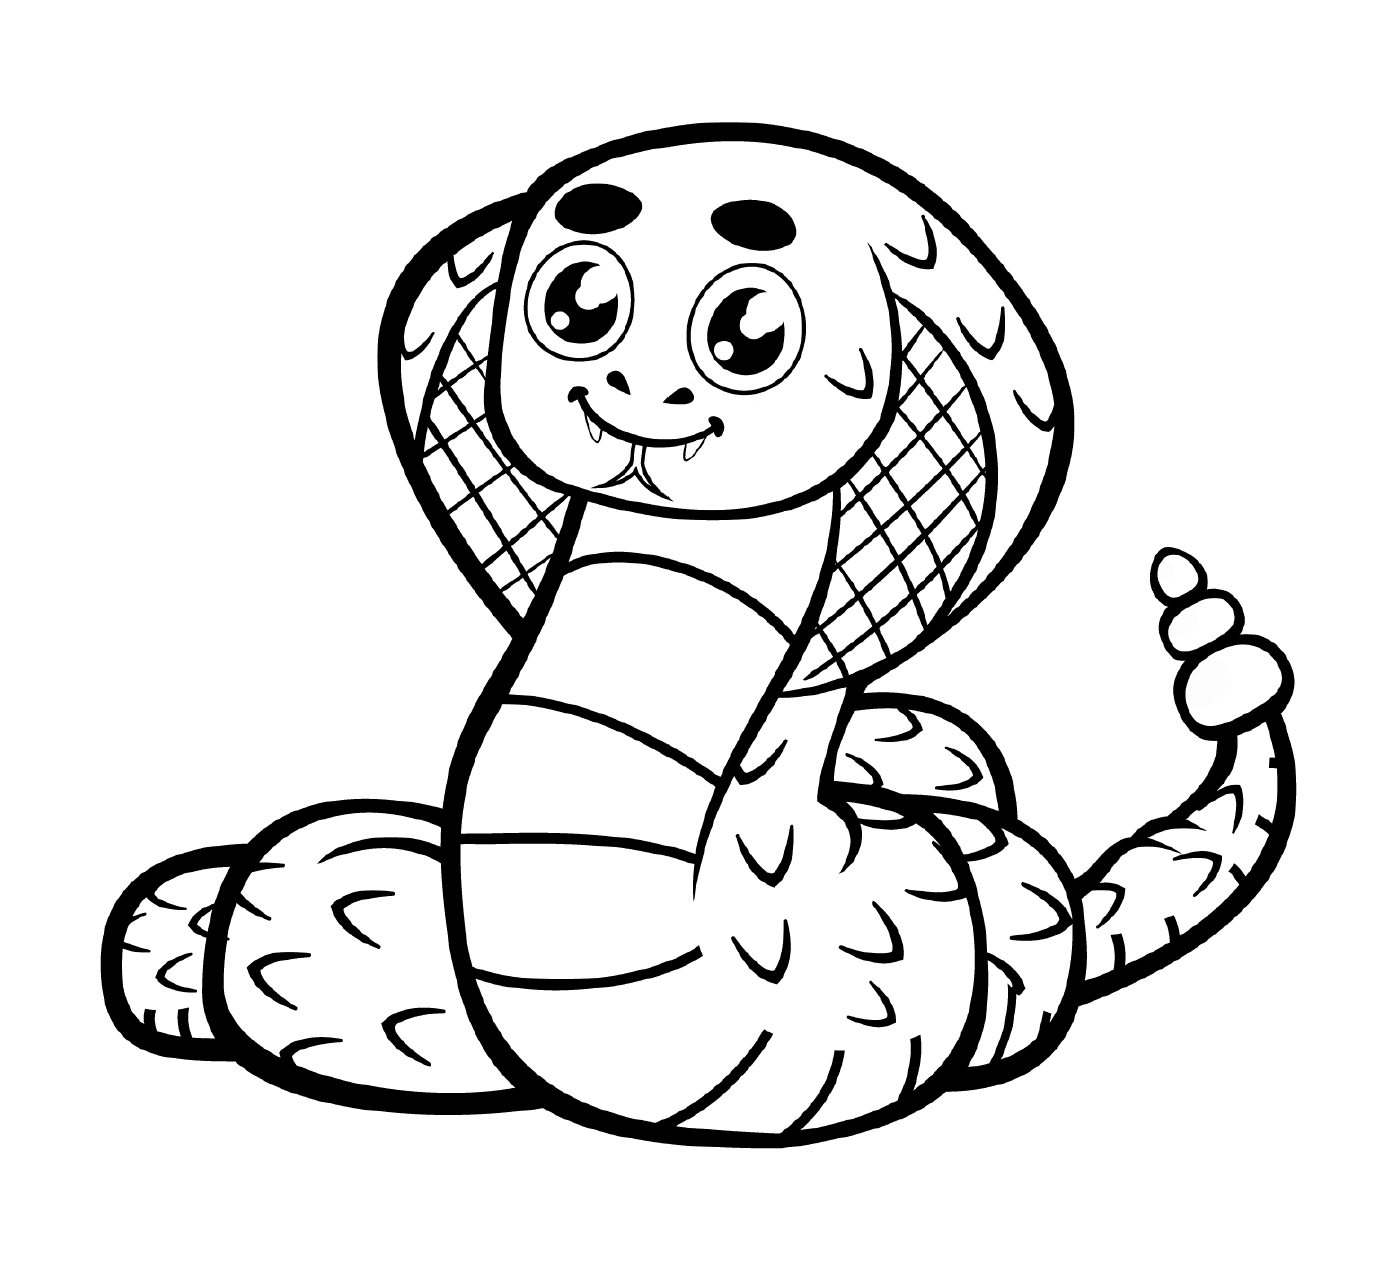  A cobra 